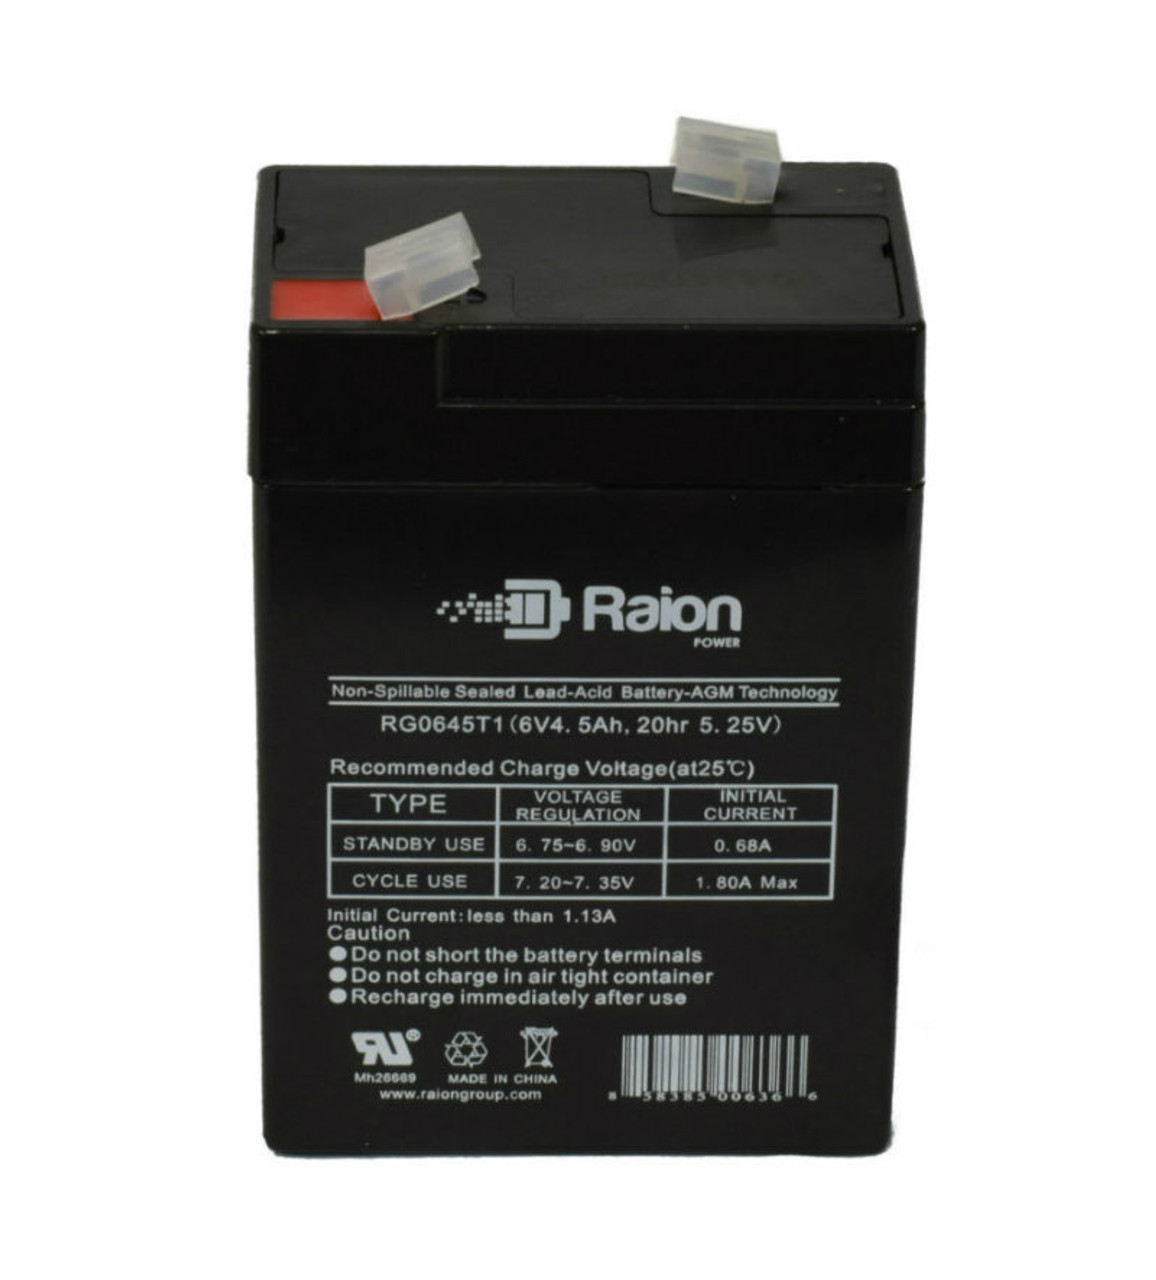 Raion Power RG0645T1 Replacement Battery Cartridge for Sonnenschein Q4